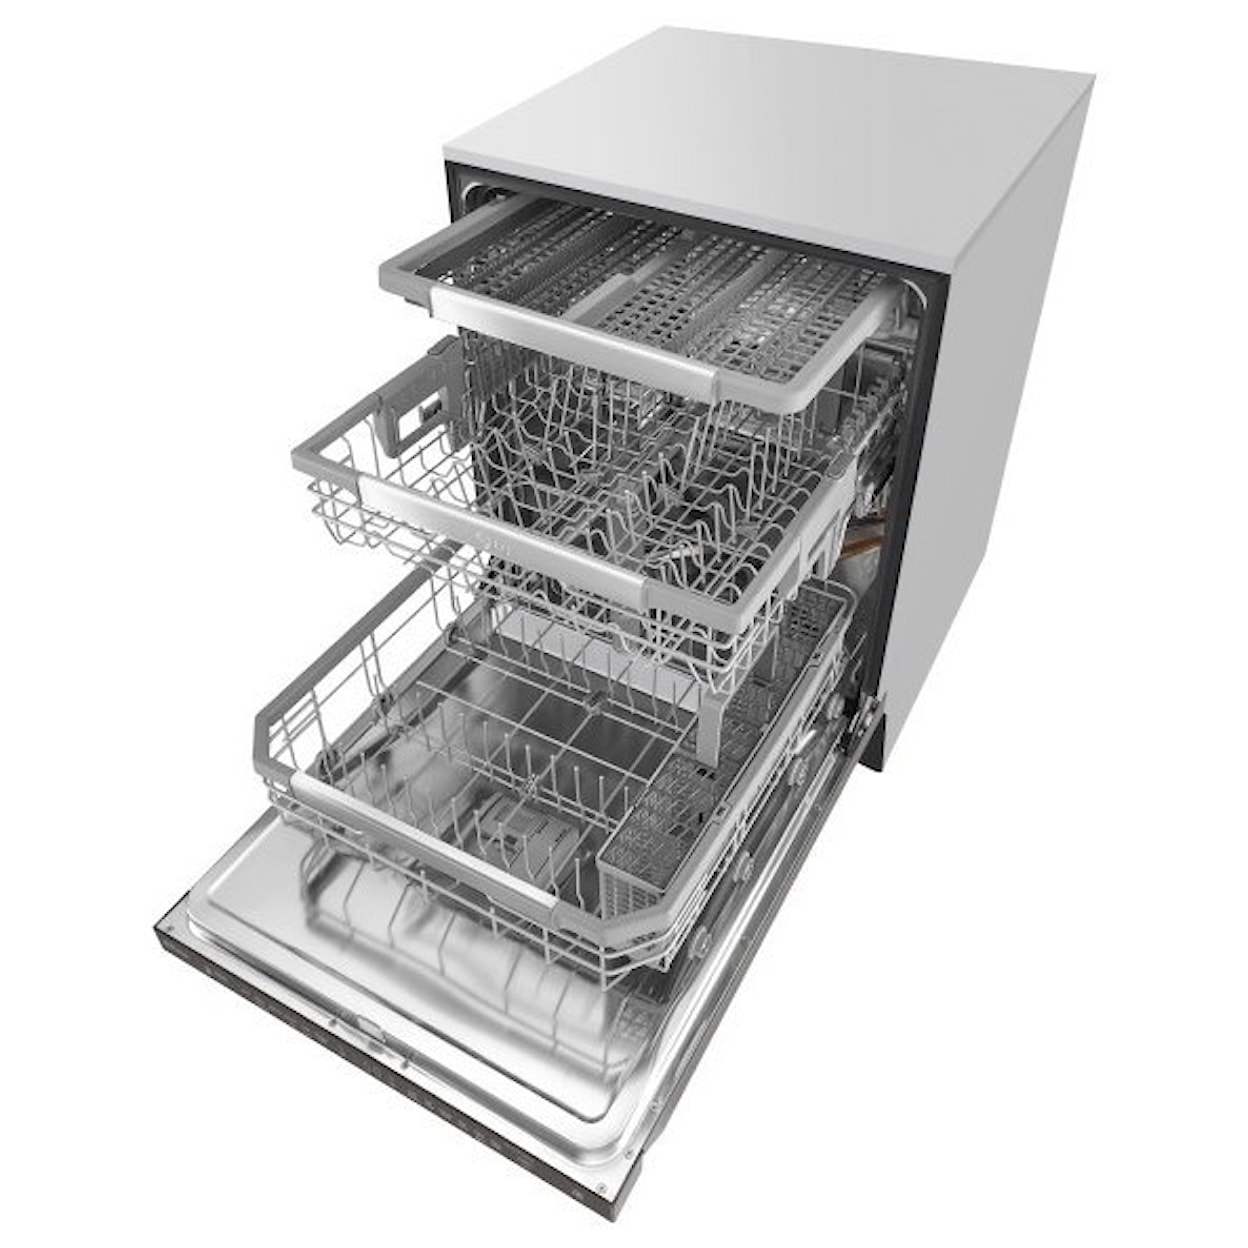 LG Appliances Dishwashers- LG Top Control QuadWash™ Dishwasher